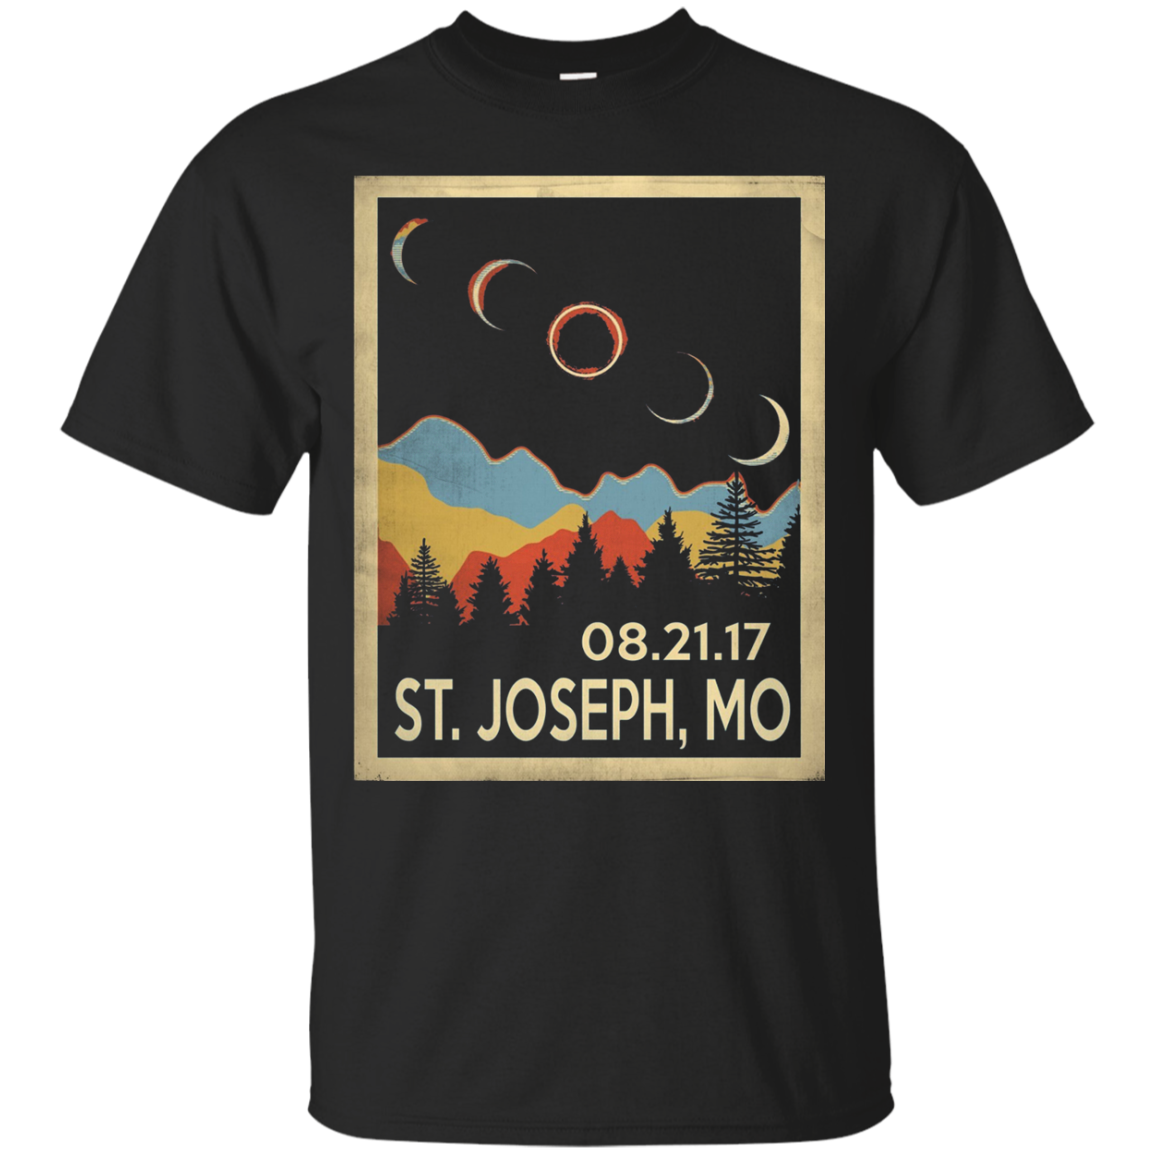 St. Joseph Missouri Solar Eclipse 2017 Tshirt_black